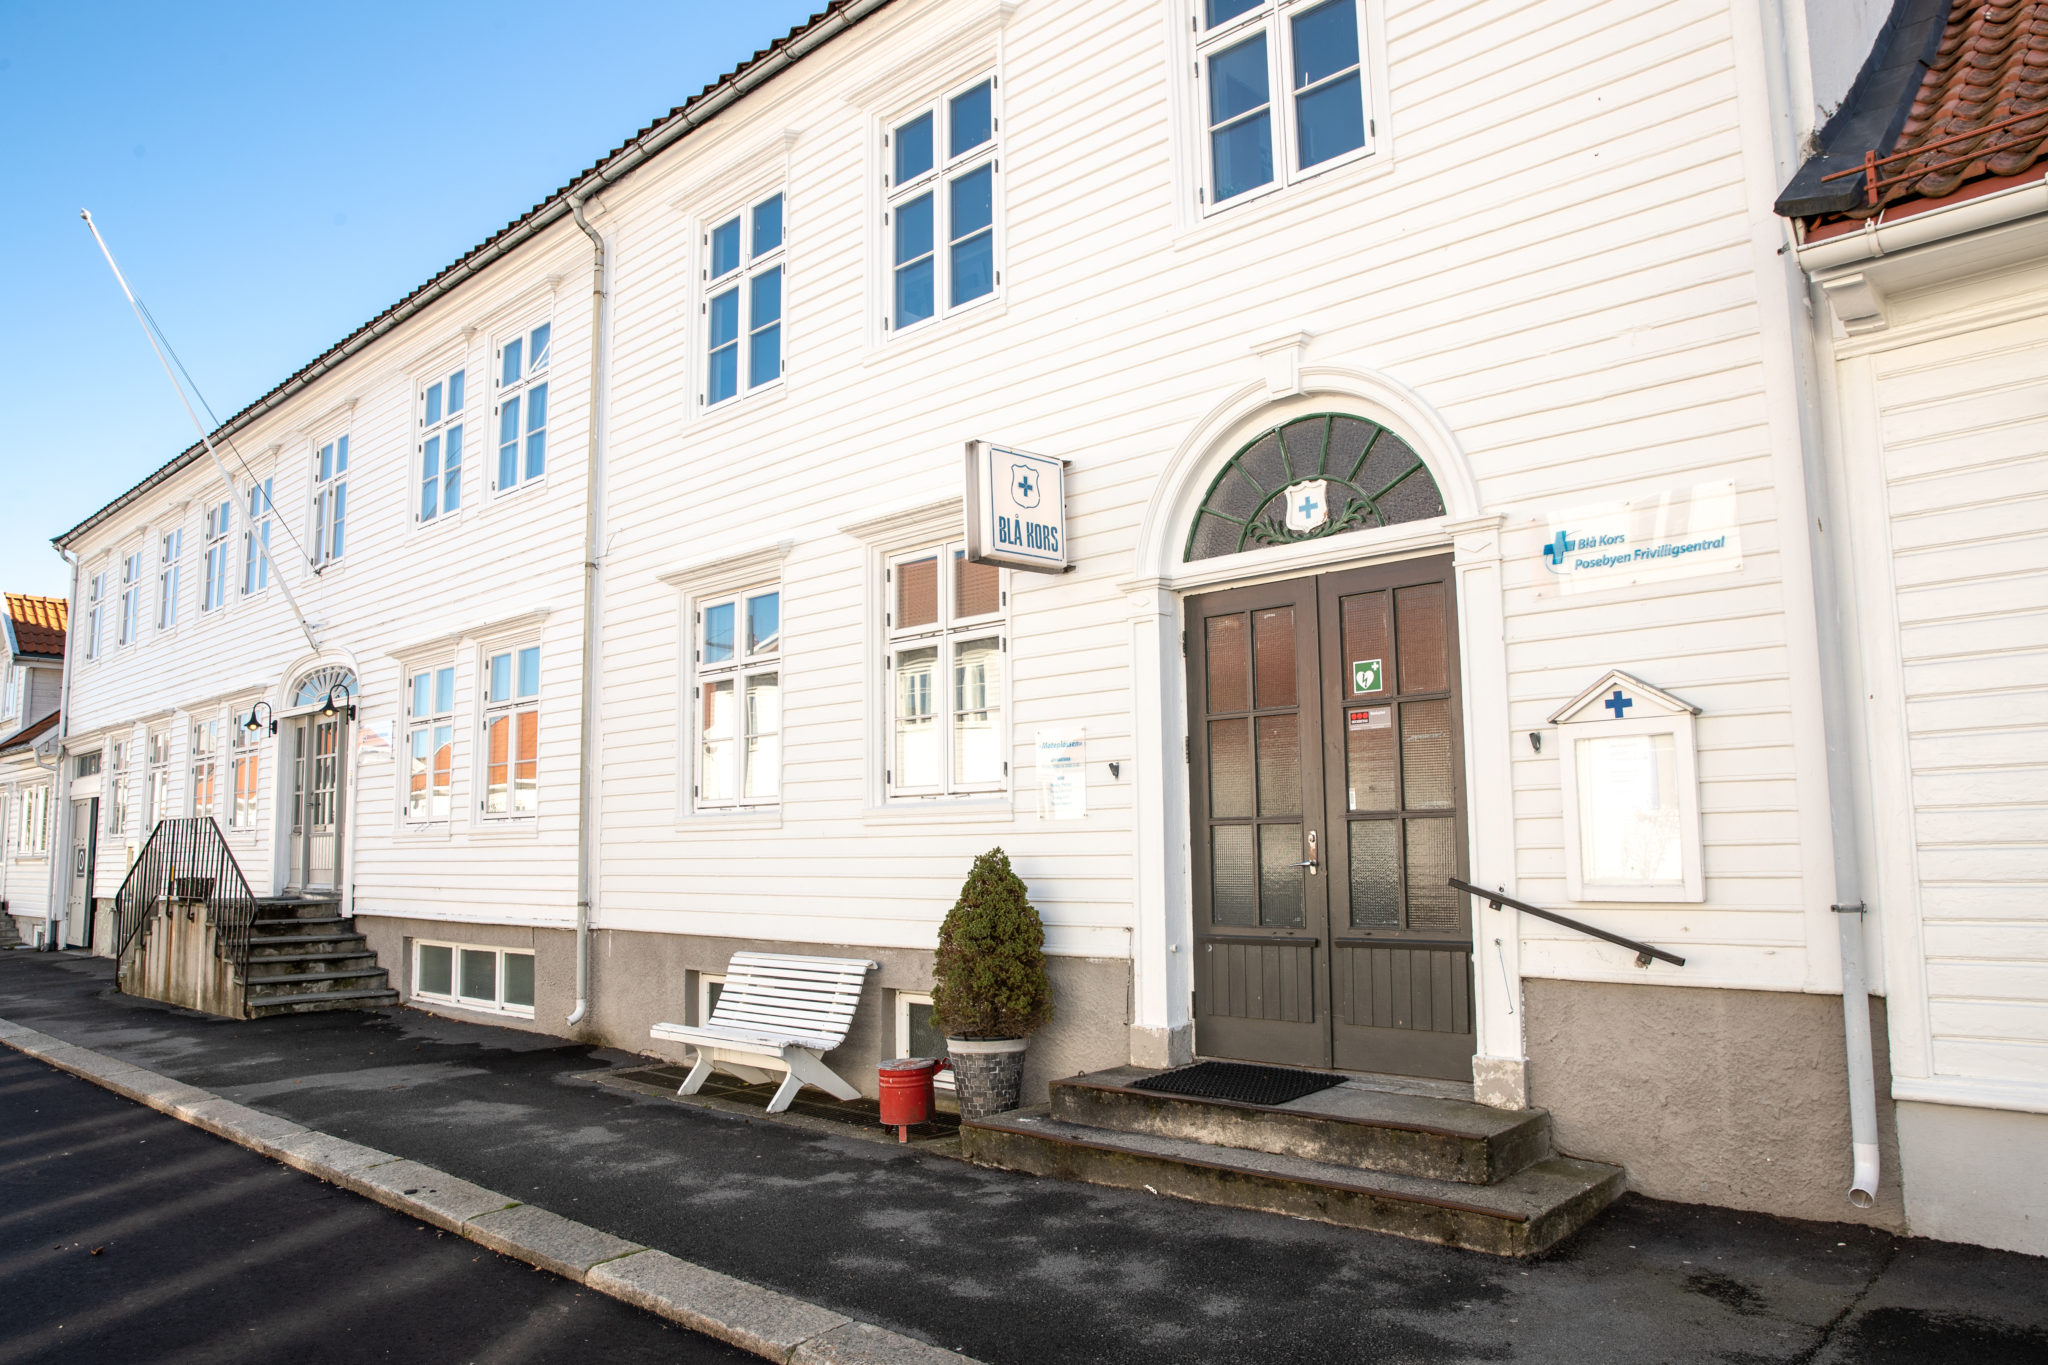 Fasade Blå Kors Kristiansand